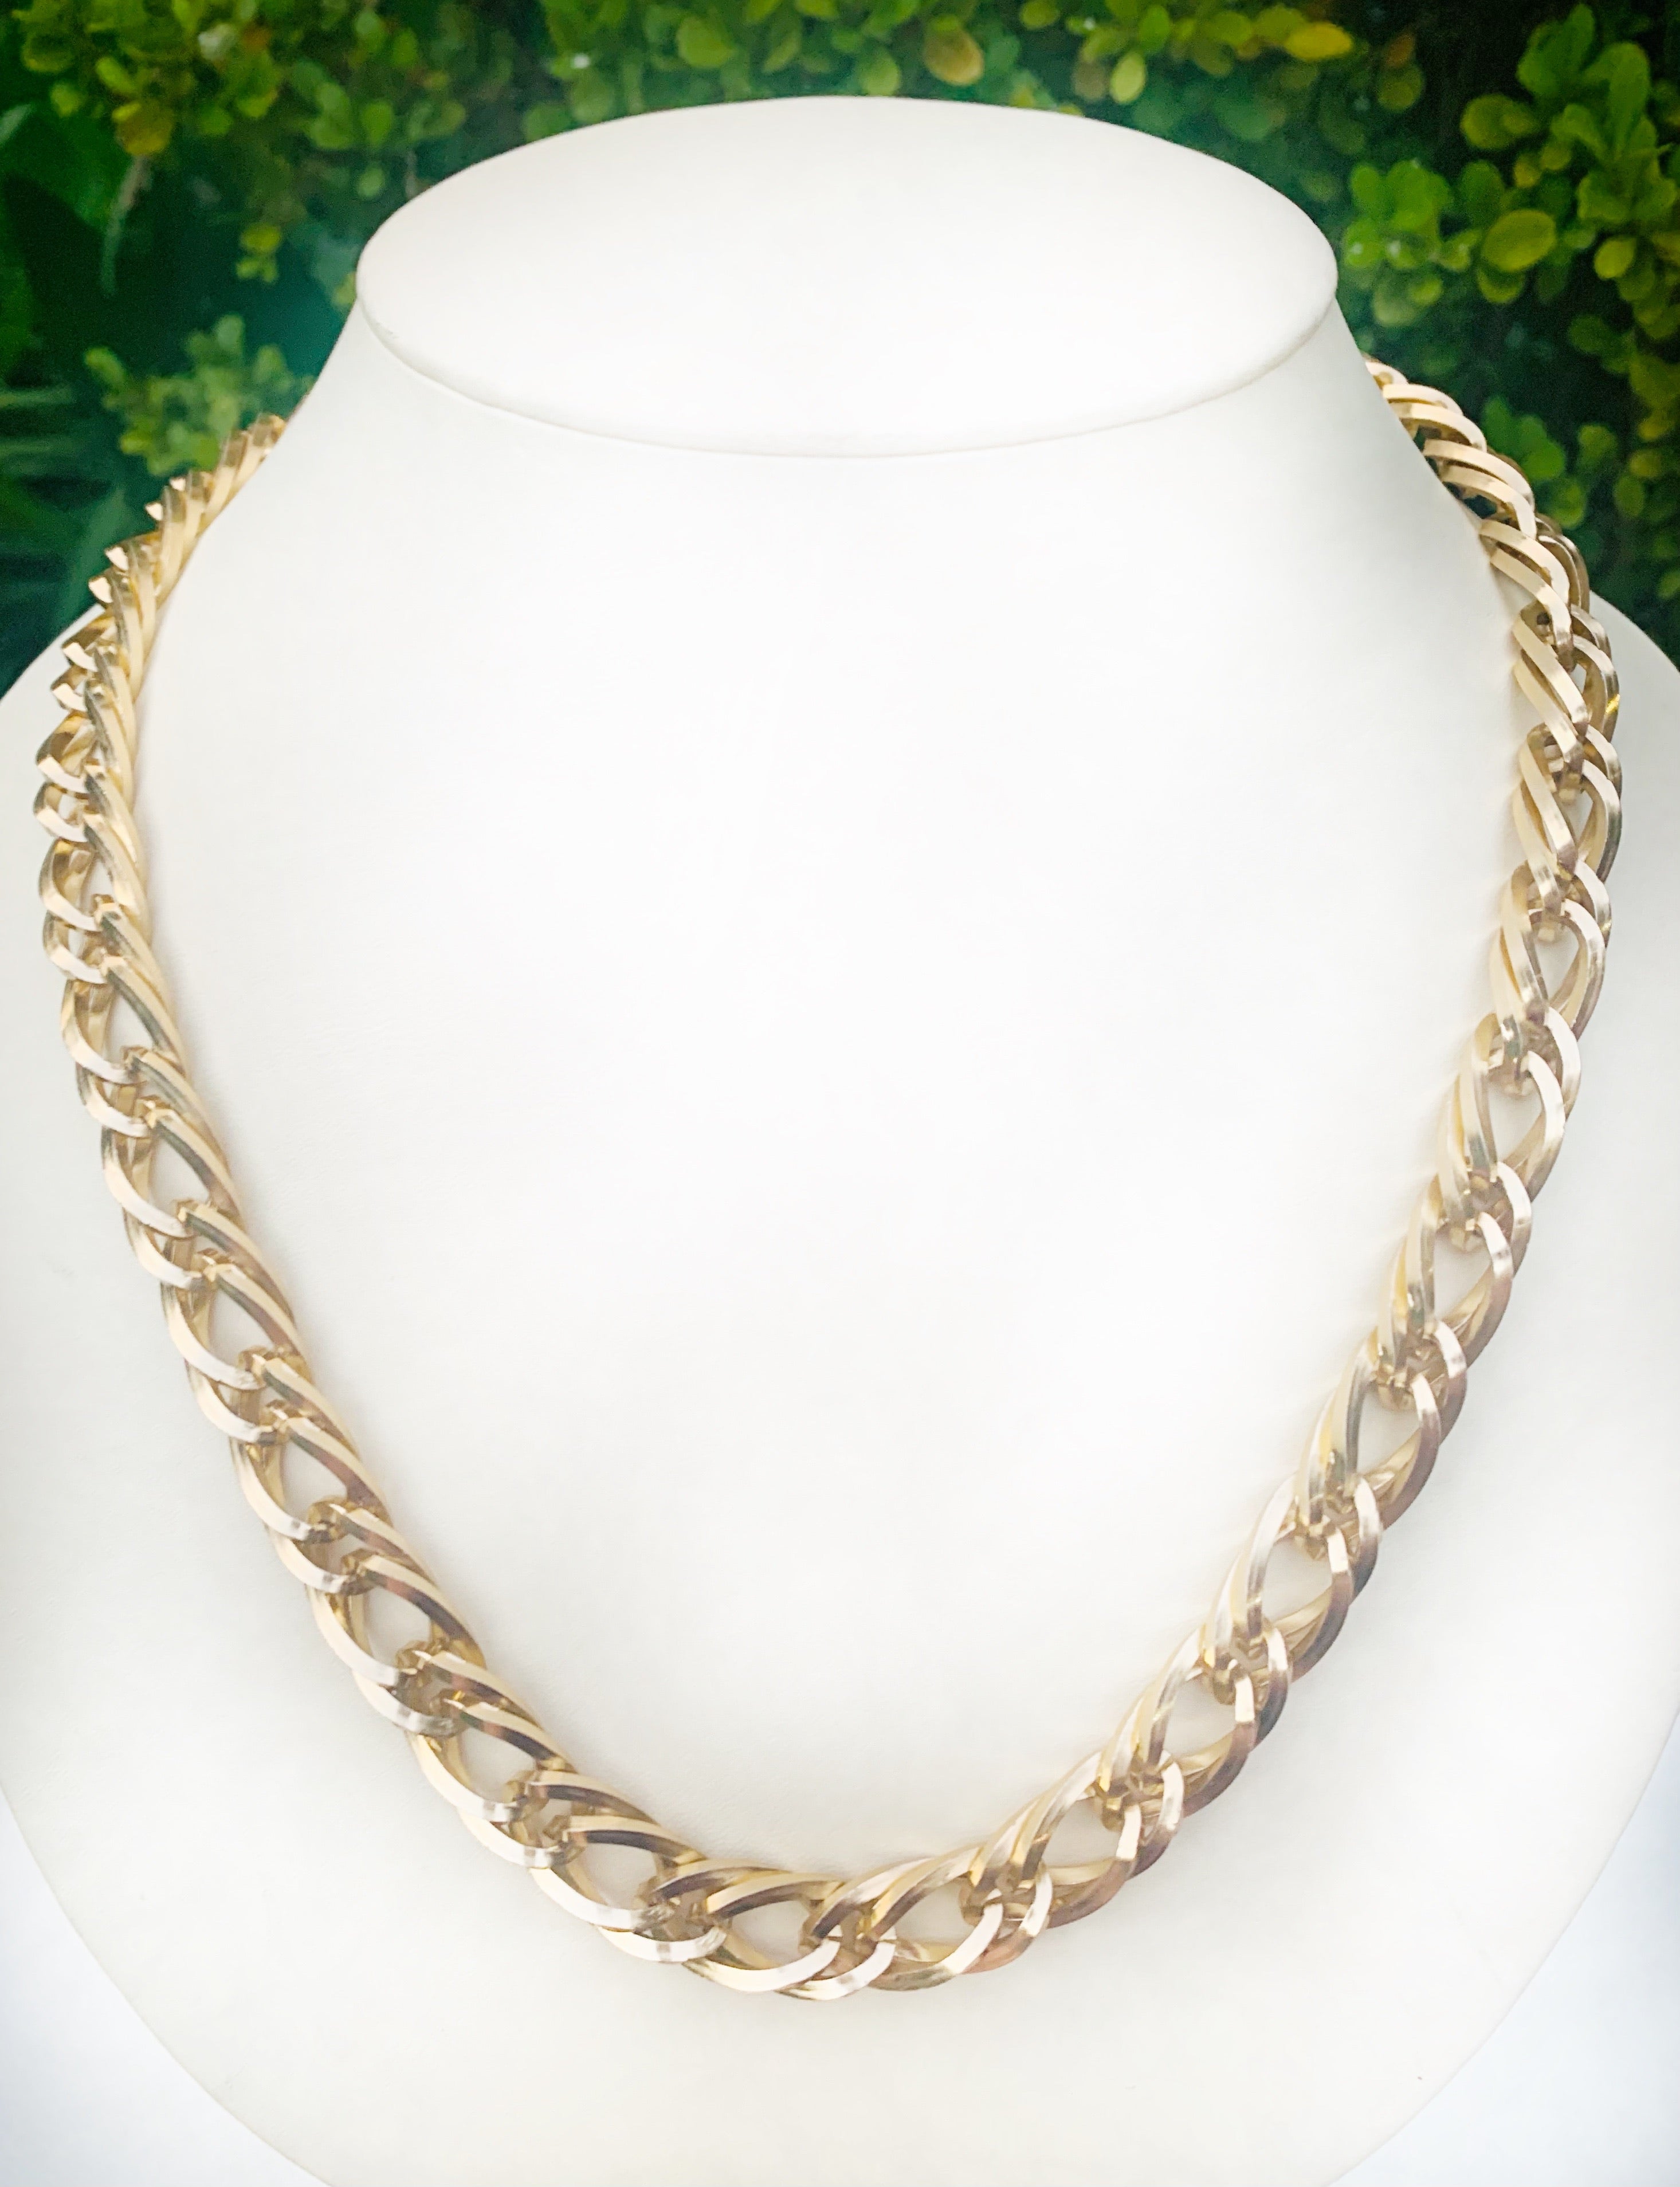 Vintage chain necklace